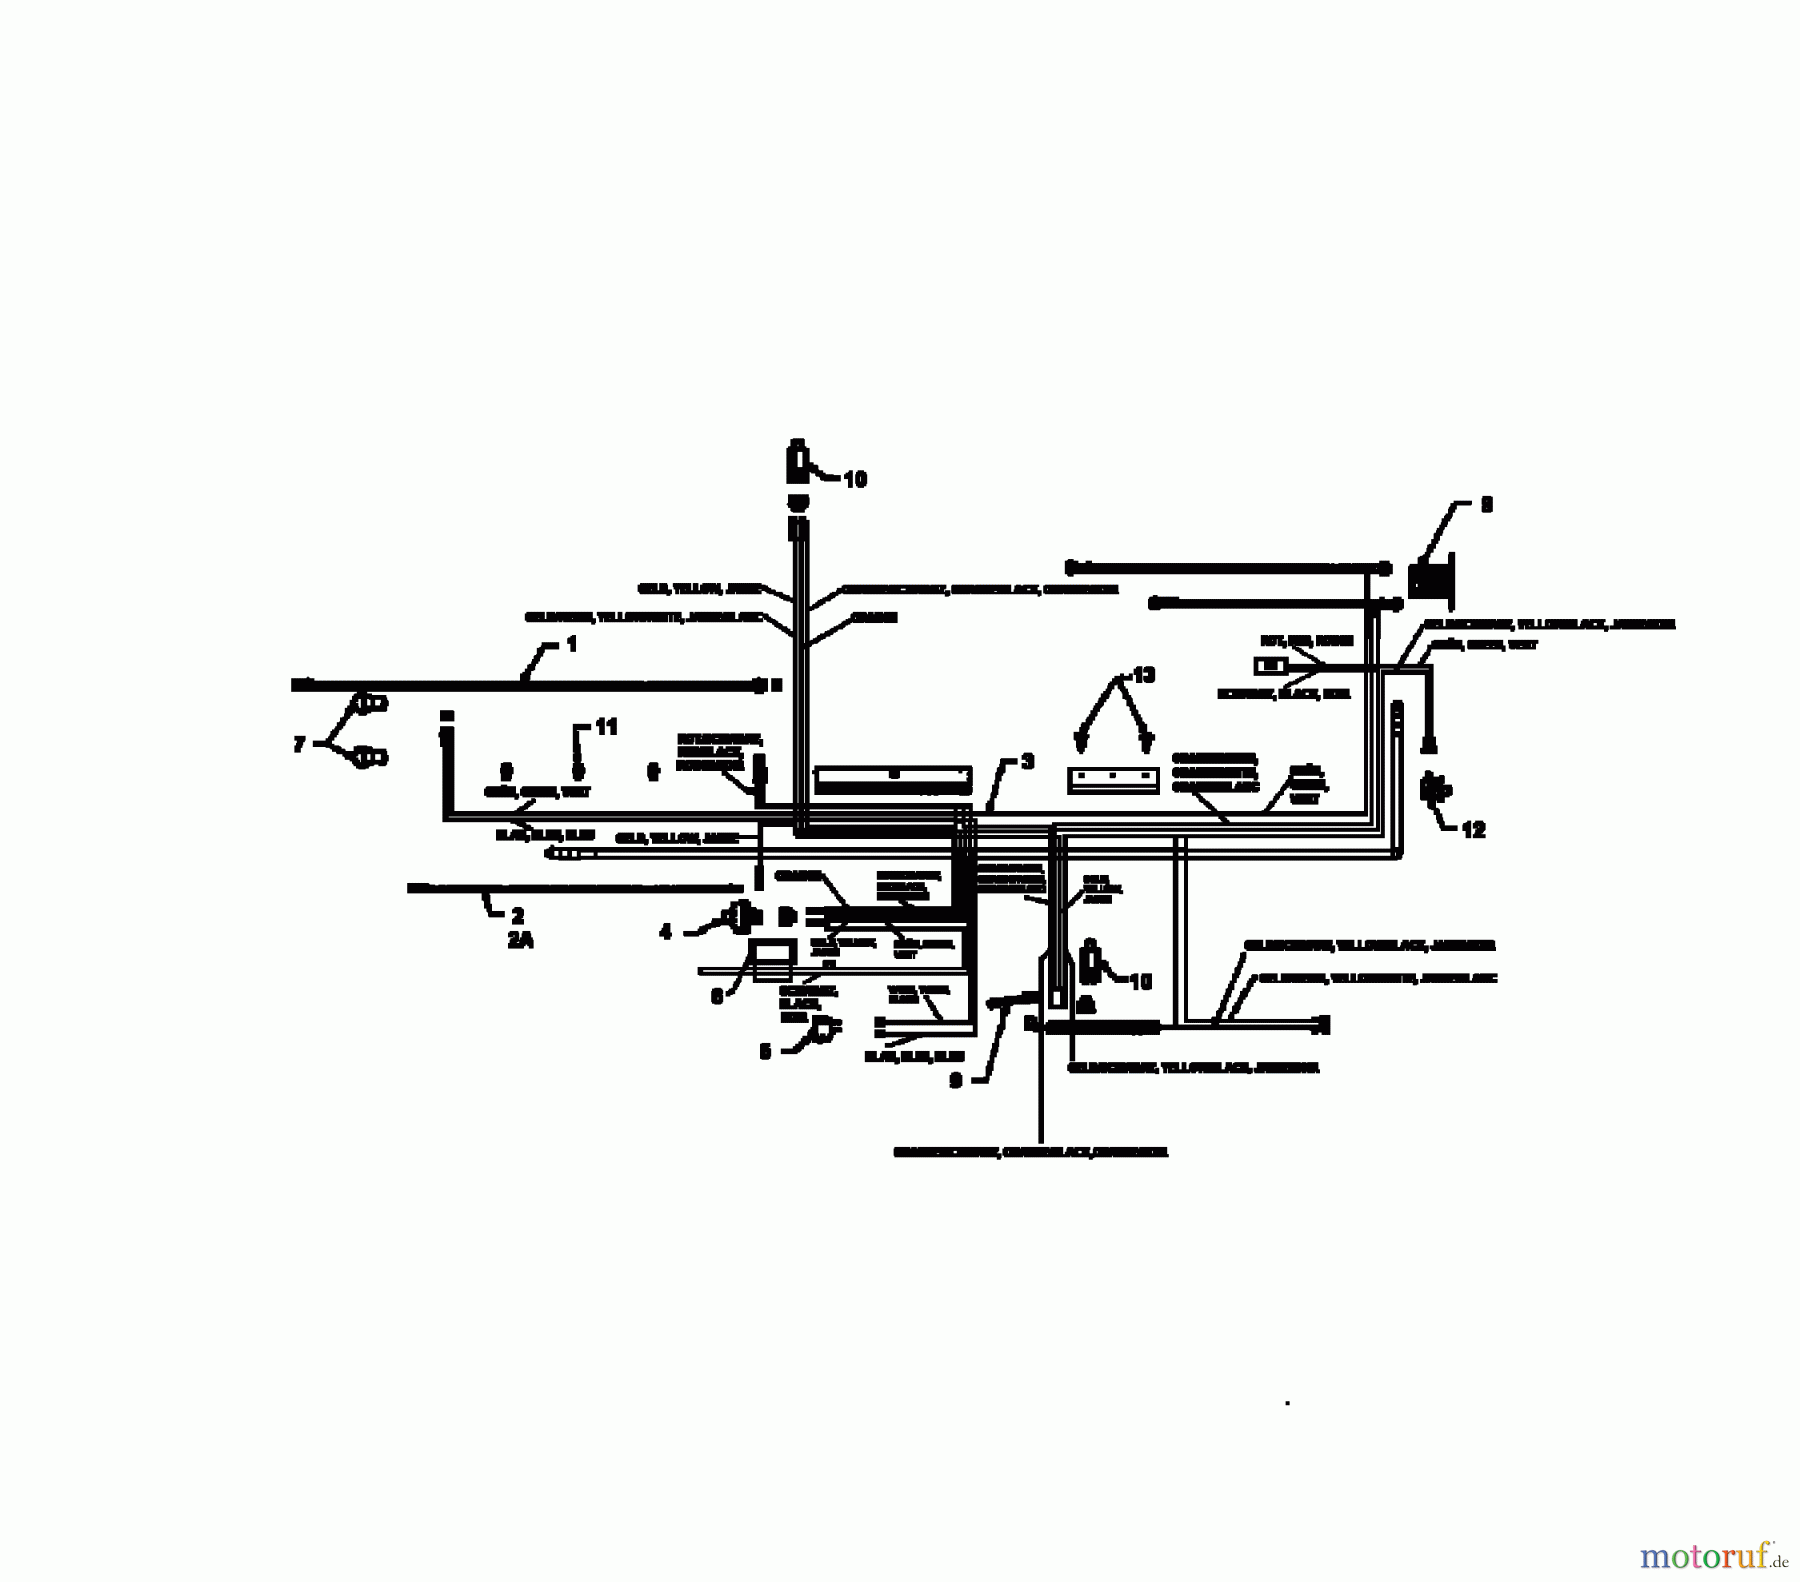  Mastercut Rasentraktoren 16/102 136T761N659  (1996) Schaltplan Vanguard